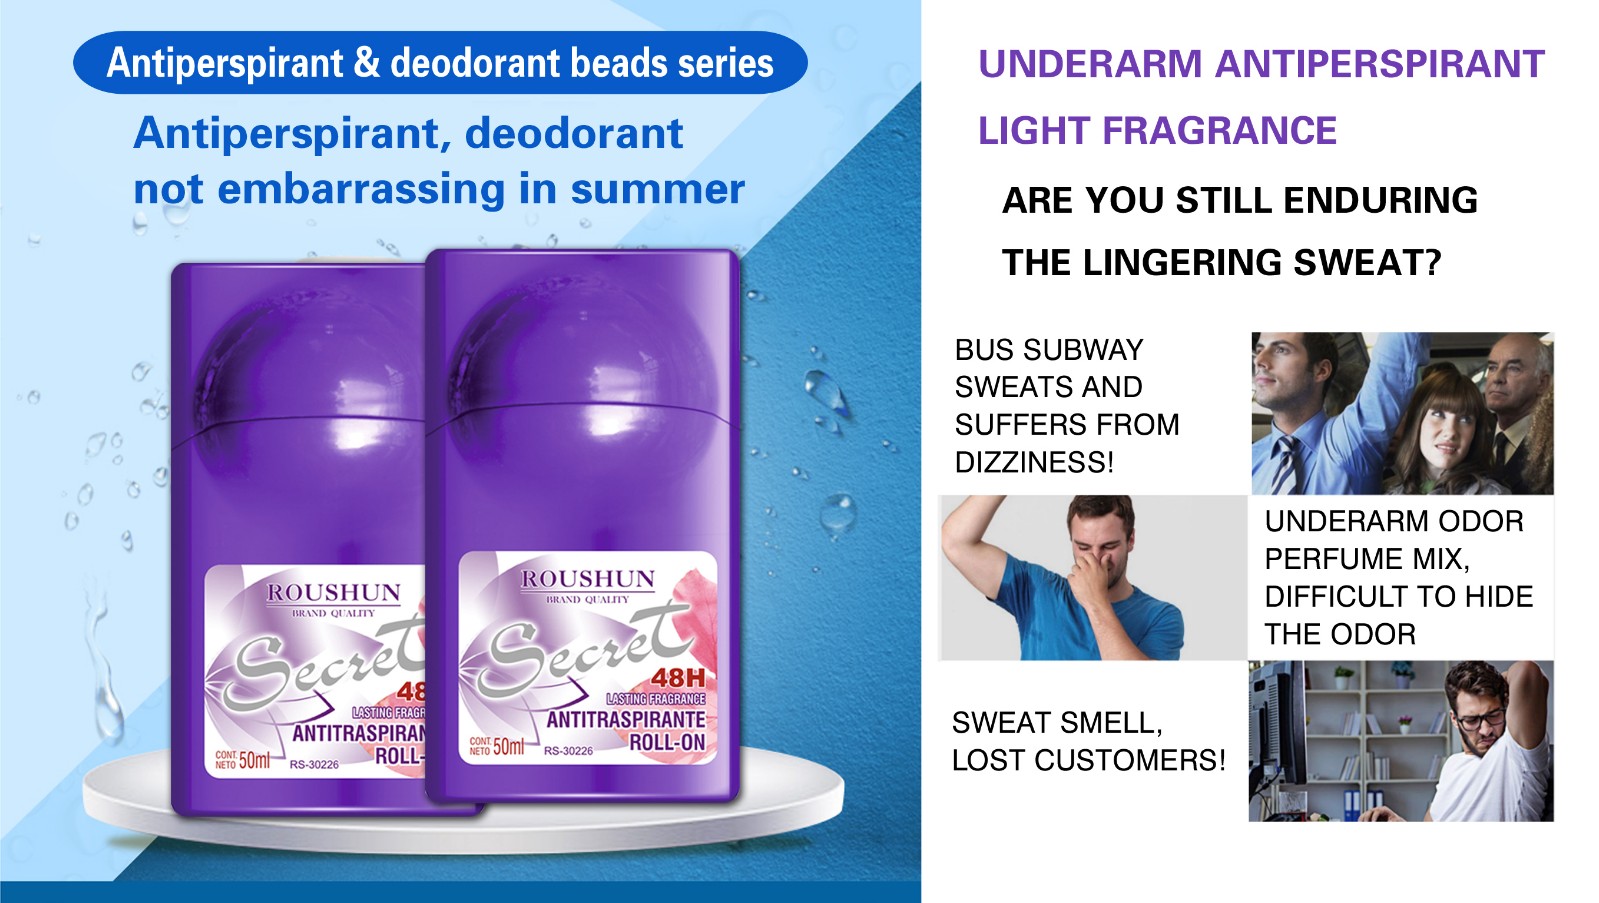 Secret roll-on deodorant